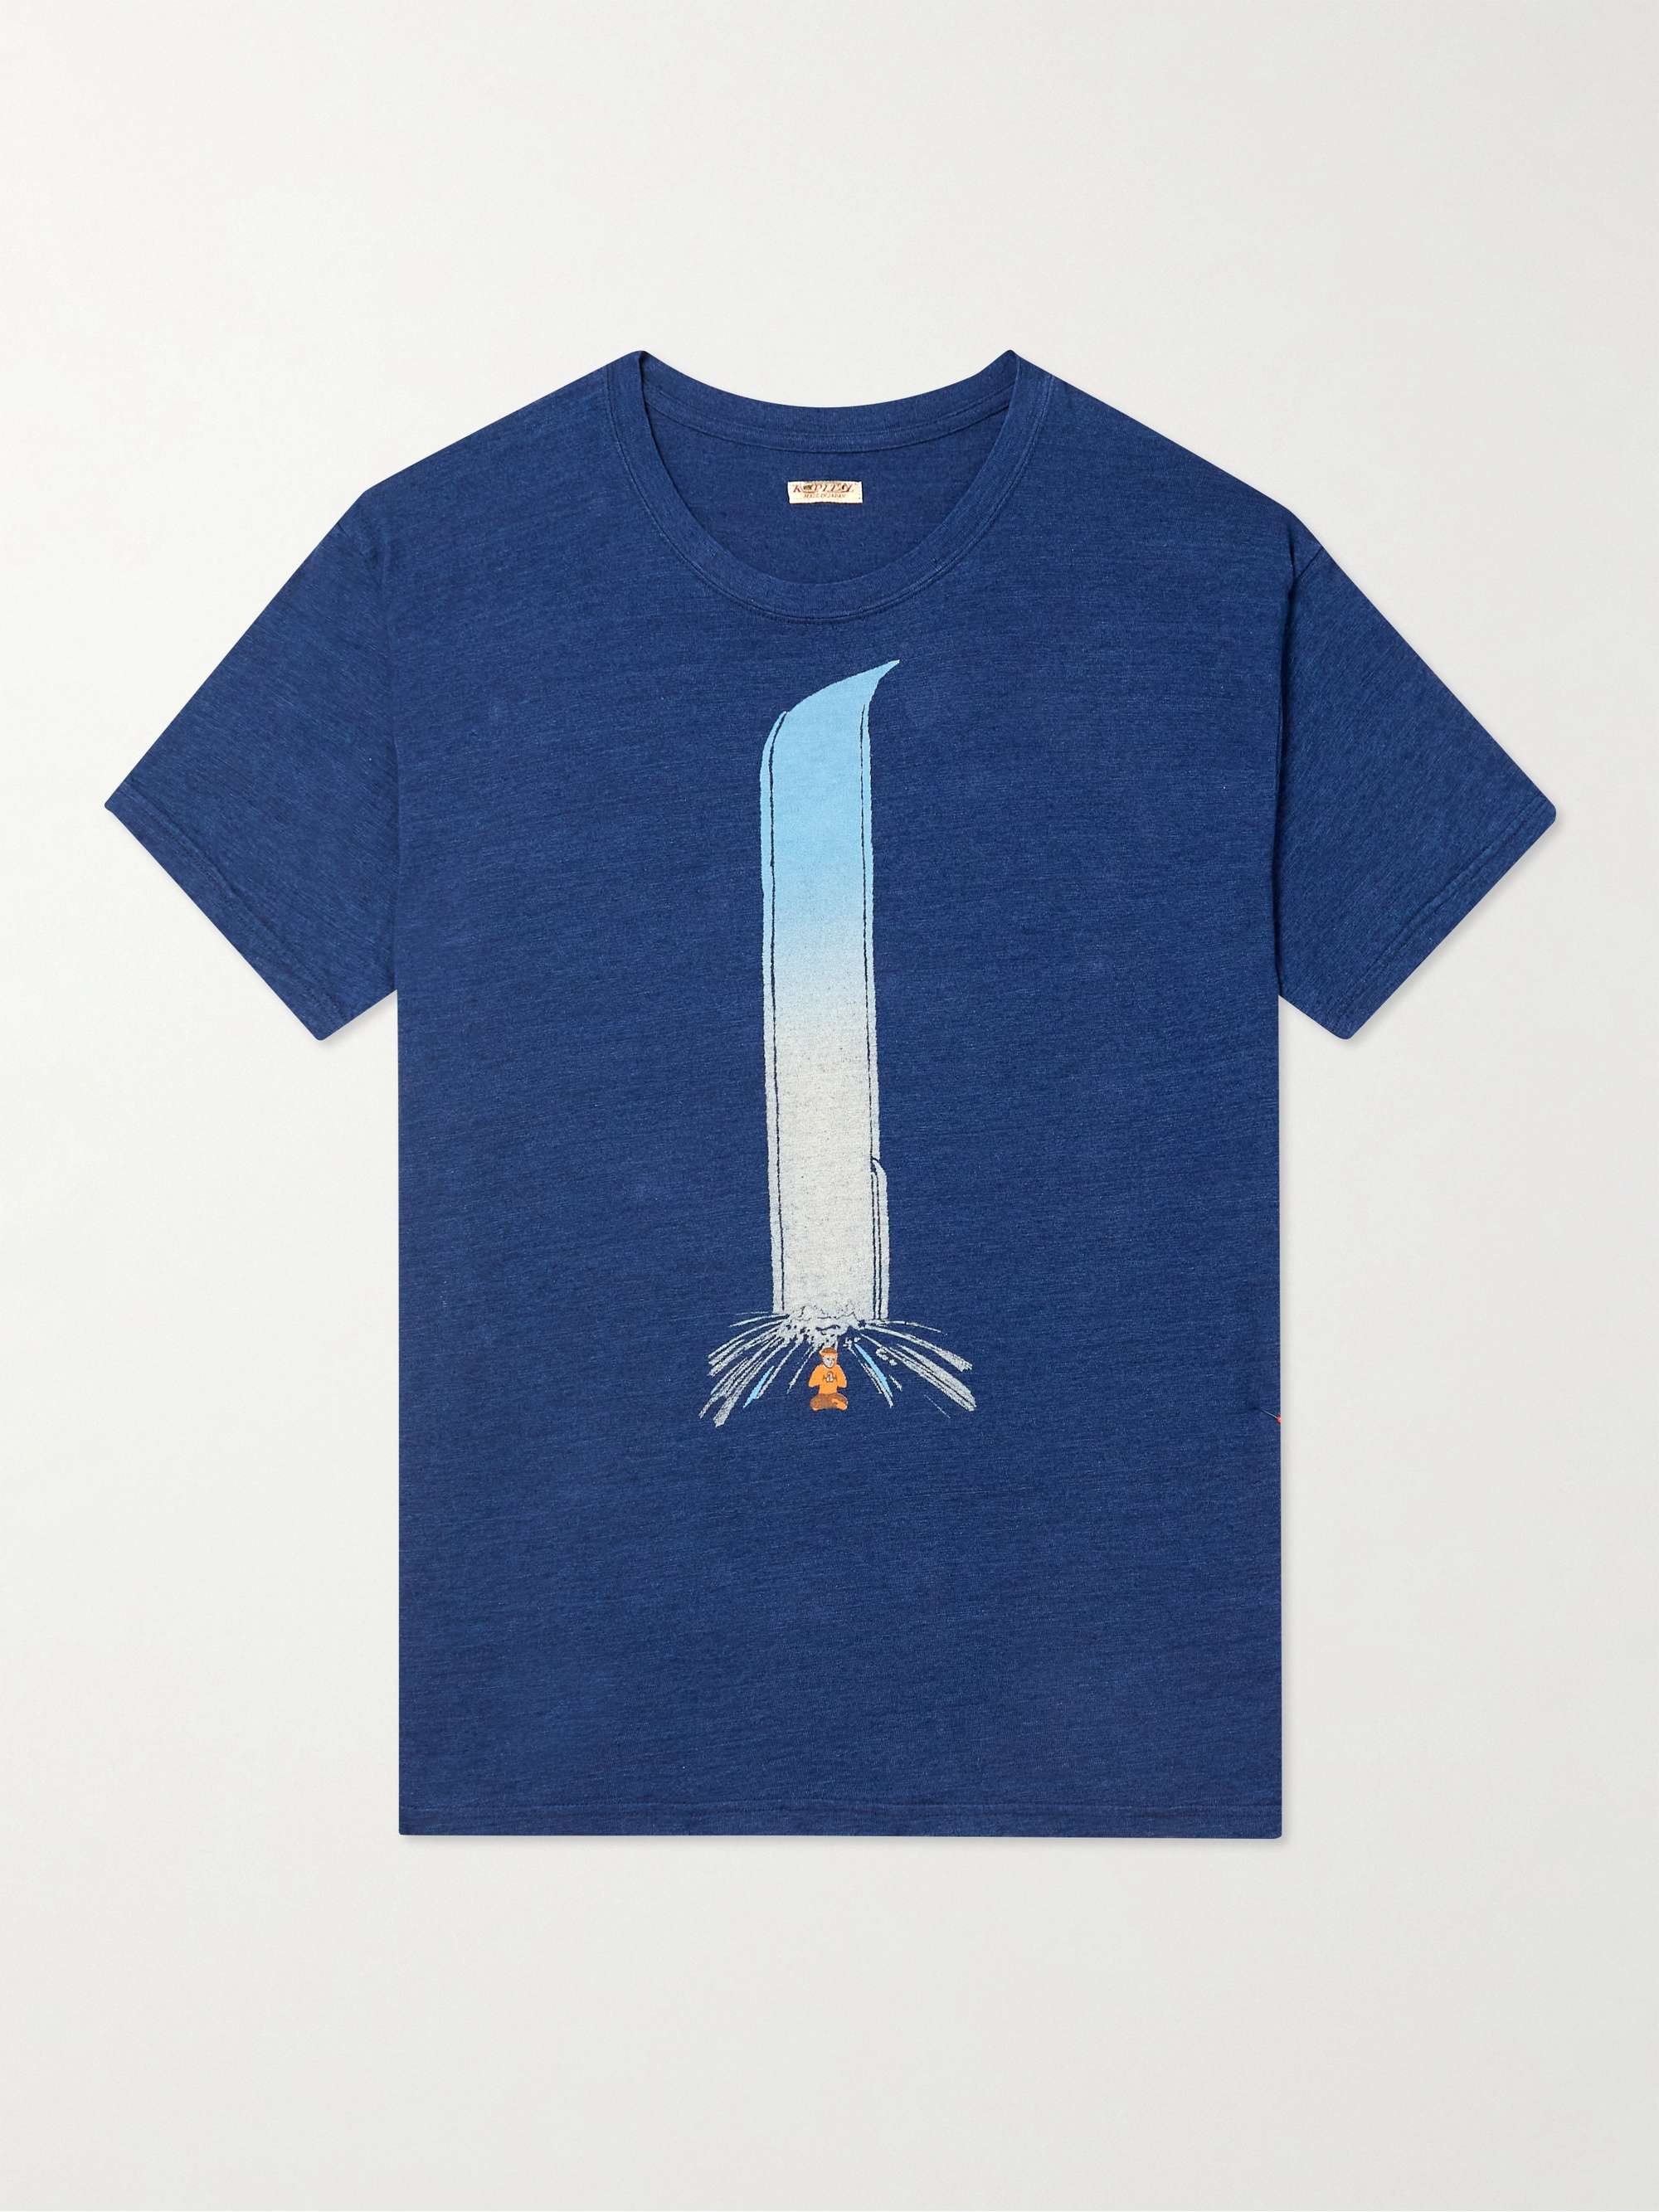 KAPITAL Laundry Max Indigo-Dyed Printed Cotton-Jersey T-Shirt